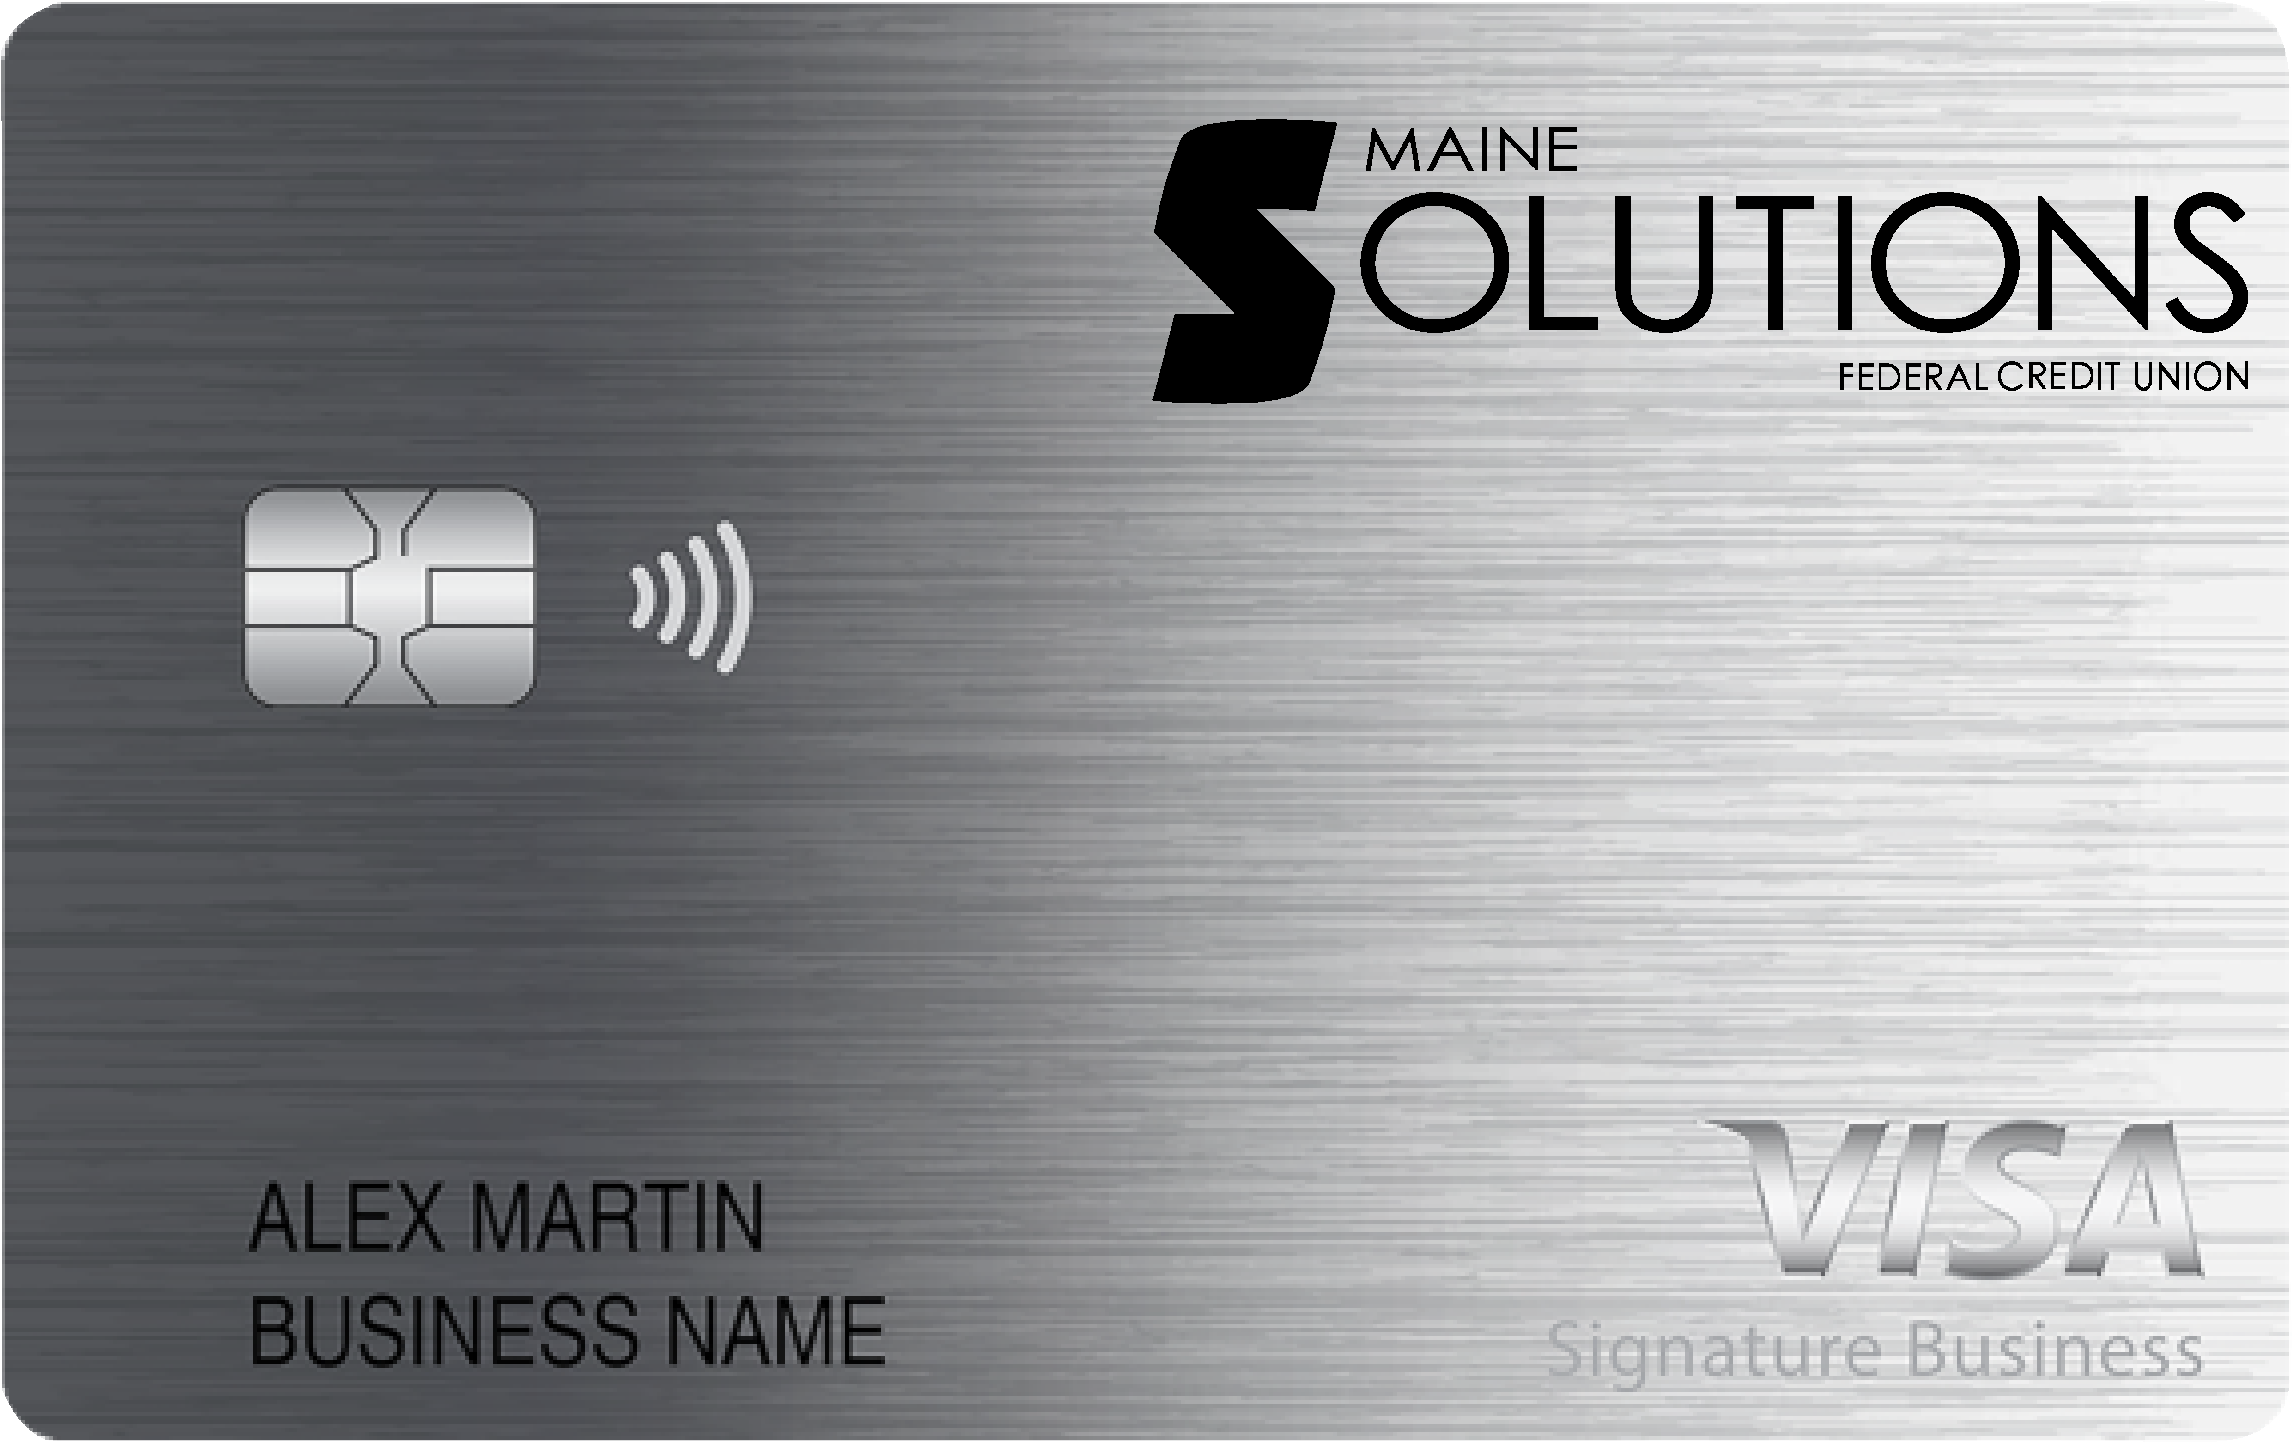 Maine Solutions FCU